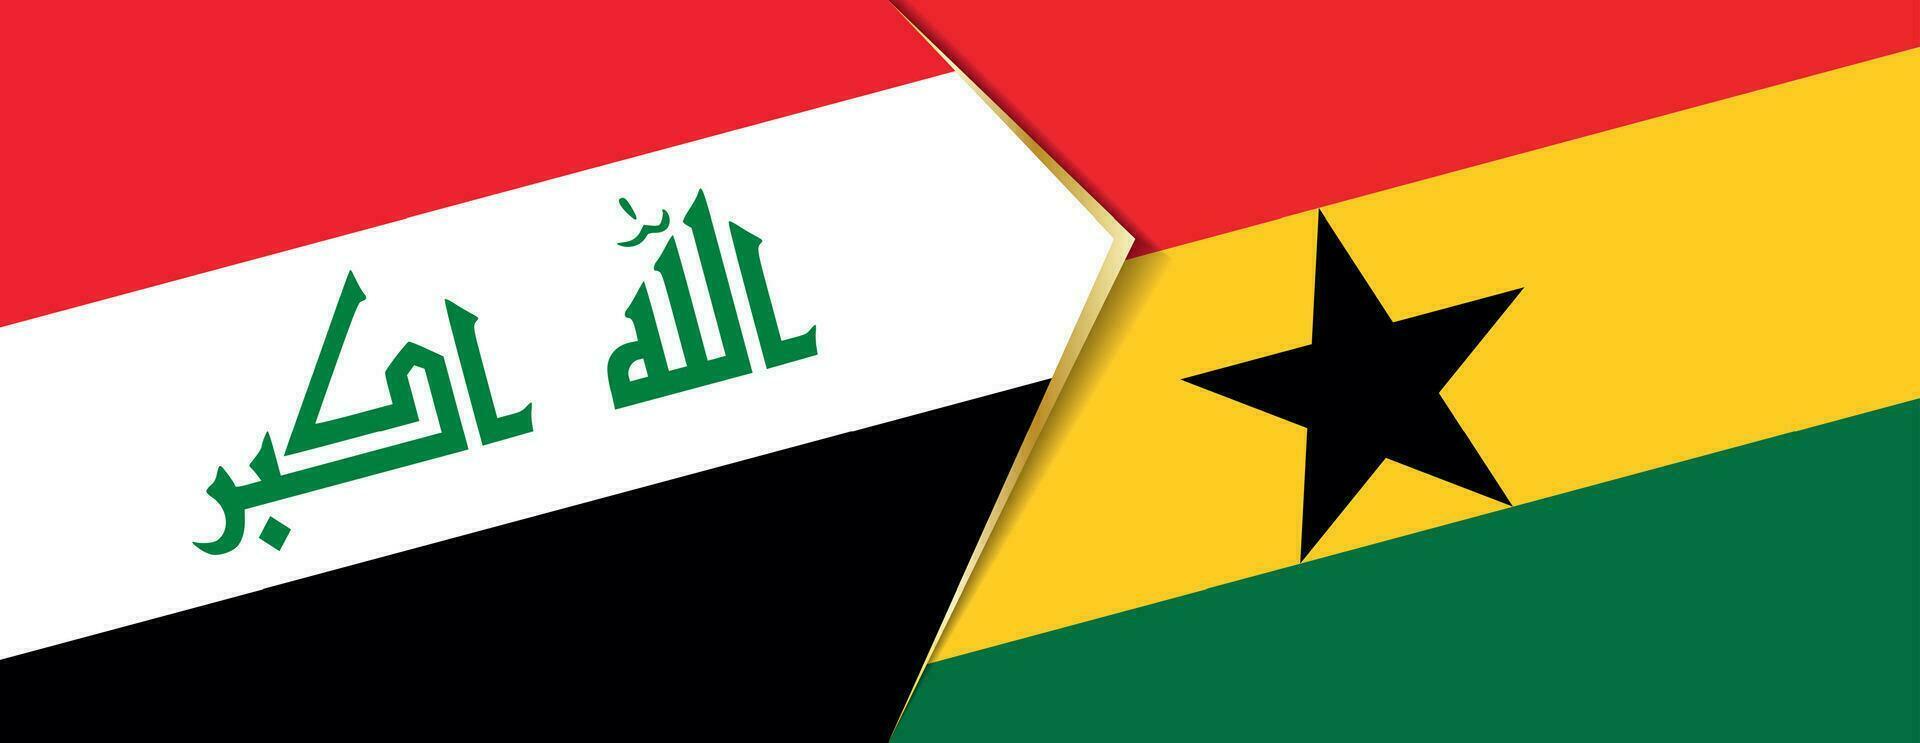 Iraq e Ghana bandiere, Due vettore bandiere.